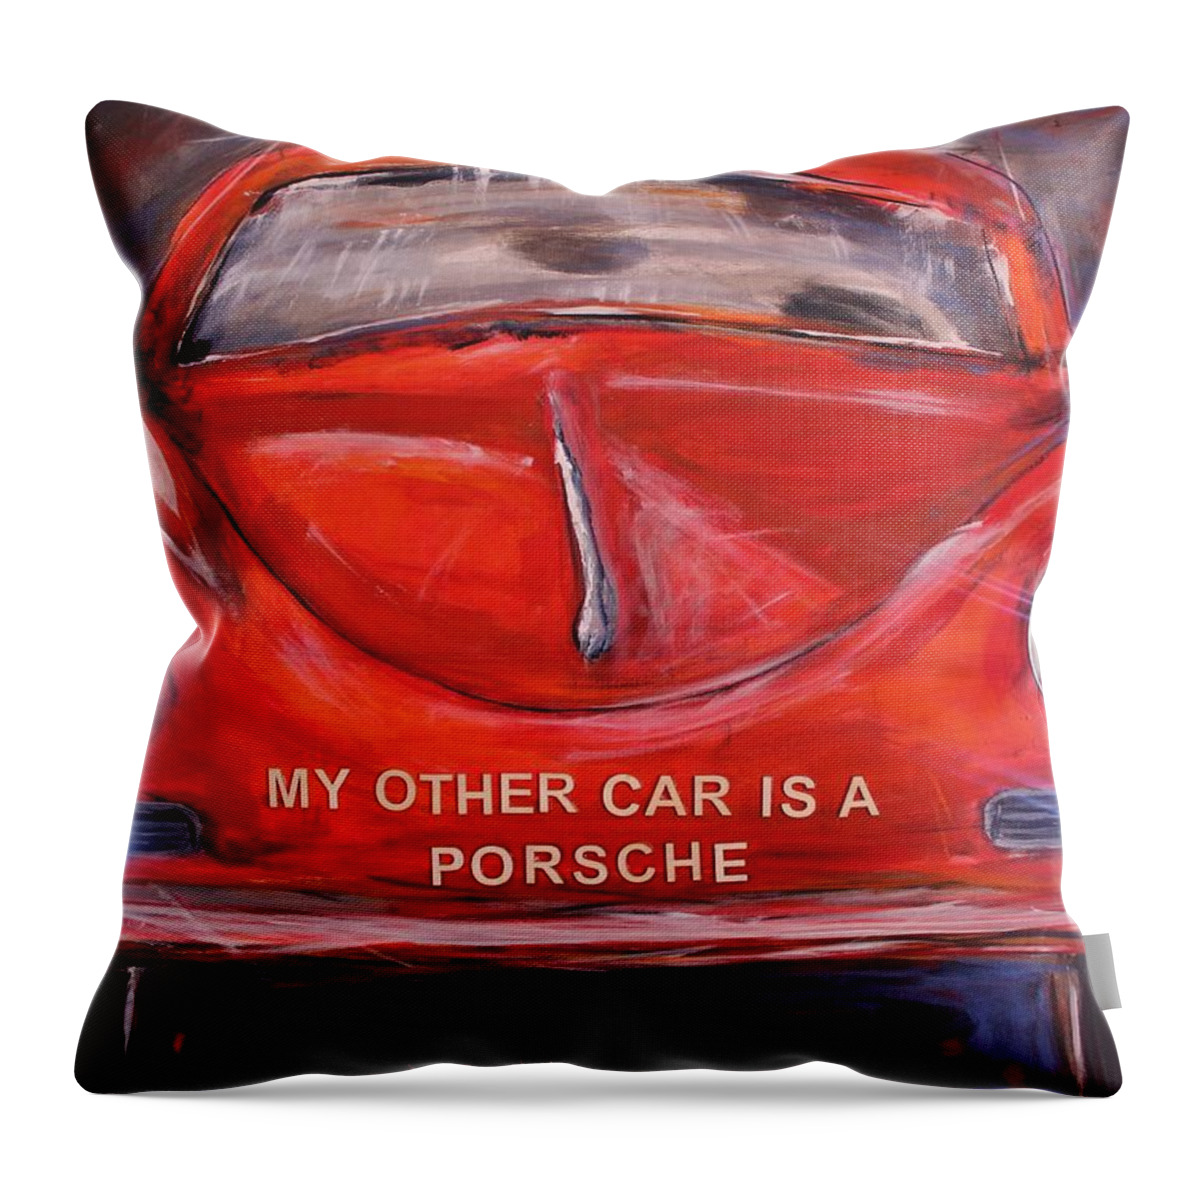 Porsche Throw Pillow featuring the painting My Other Car is a Porsche lights on by Lucy Matta